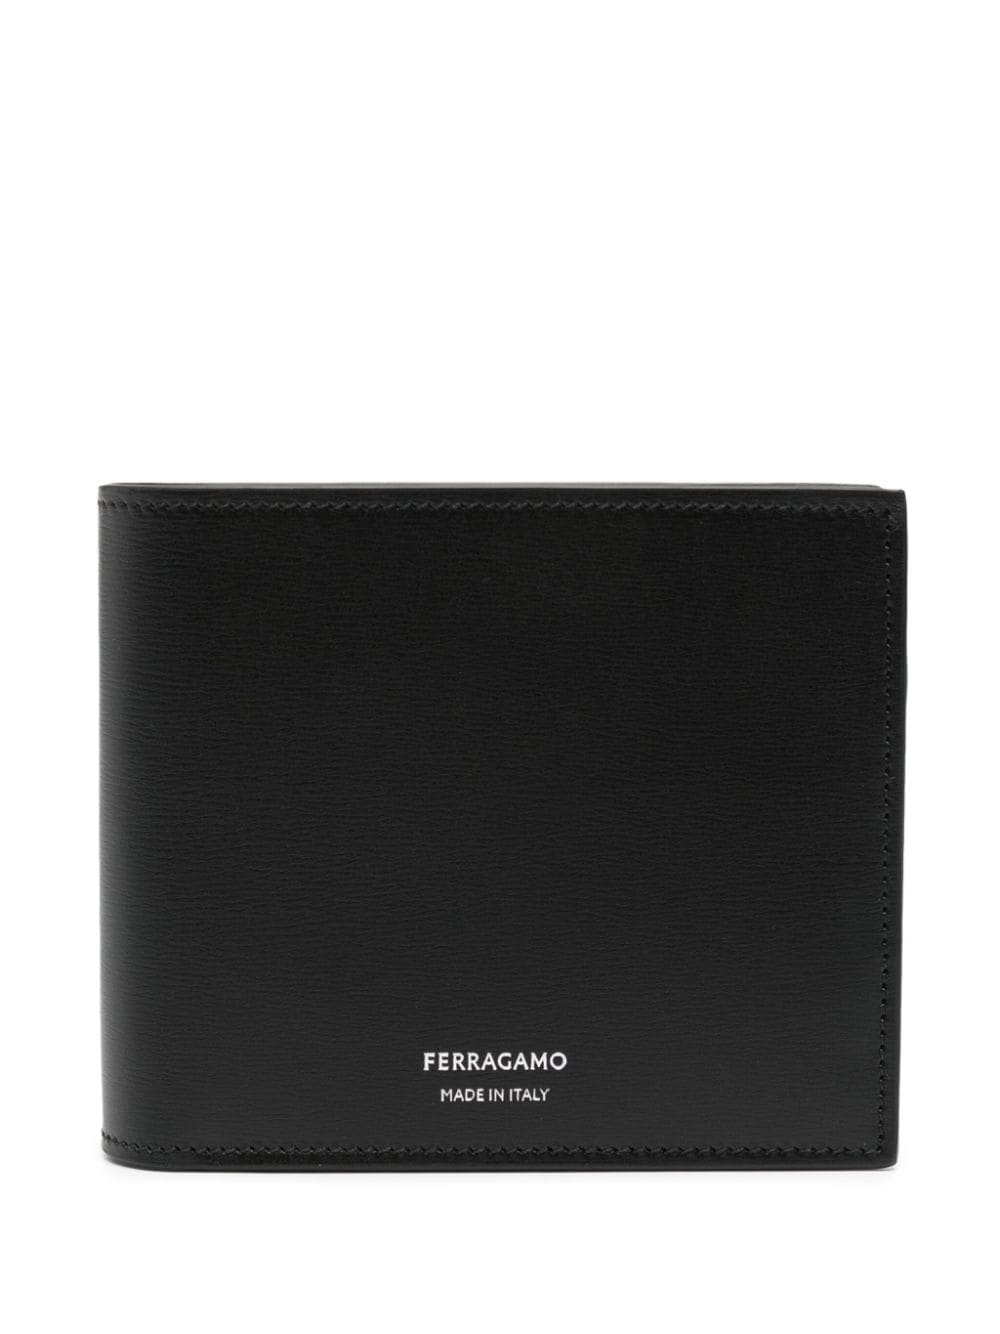 Ferragamo logo-stamp leather wallet - Nero